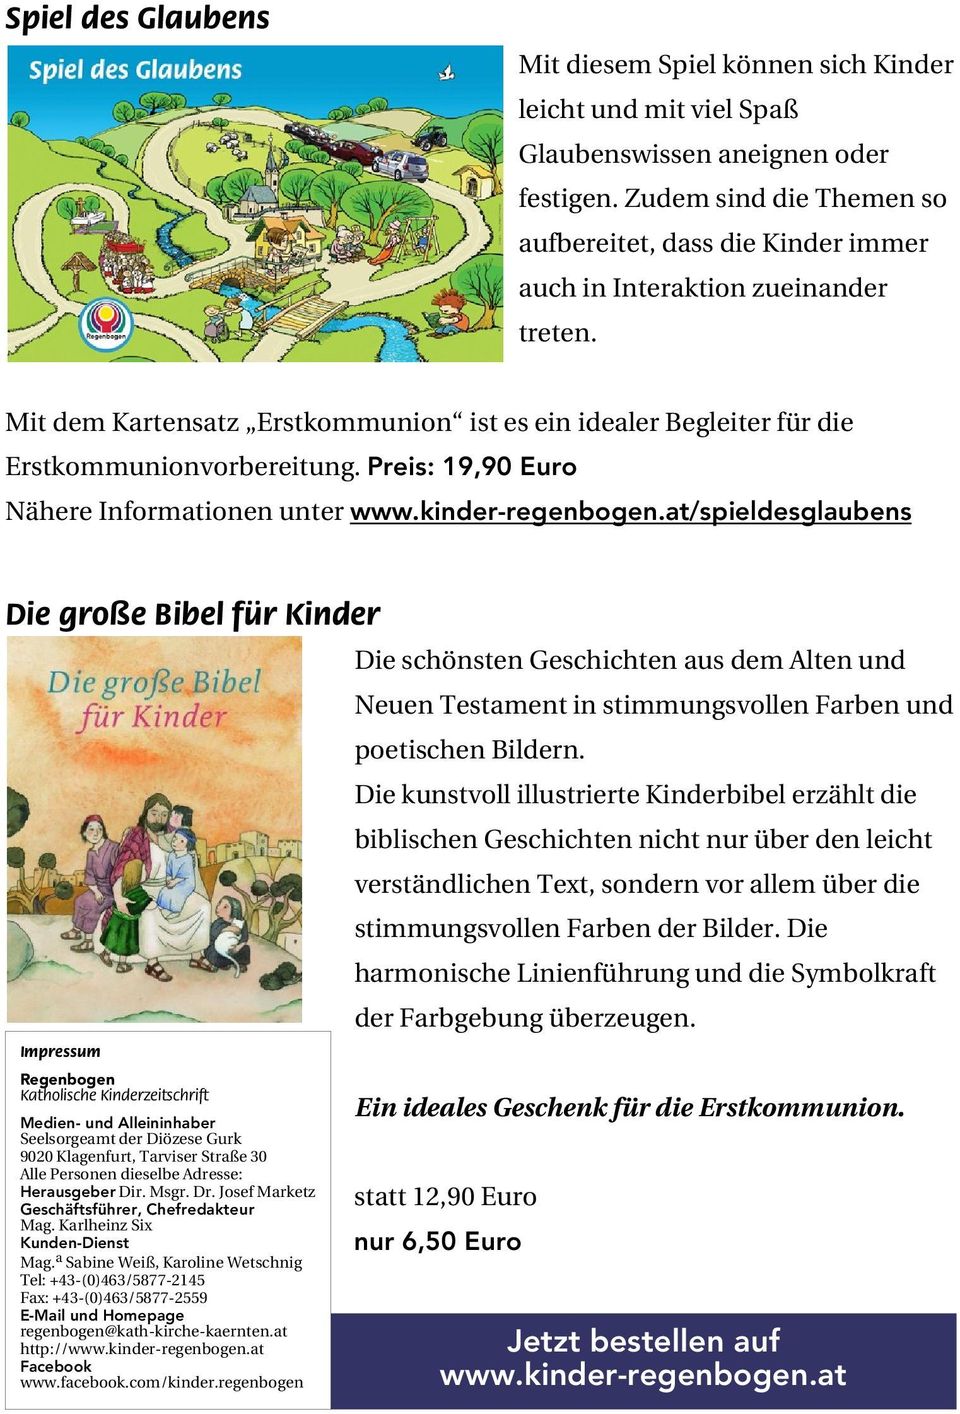 Preis: 19,90 Euro Nähere Informationen unter www.kinder-regenbogen.